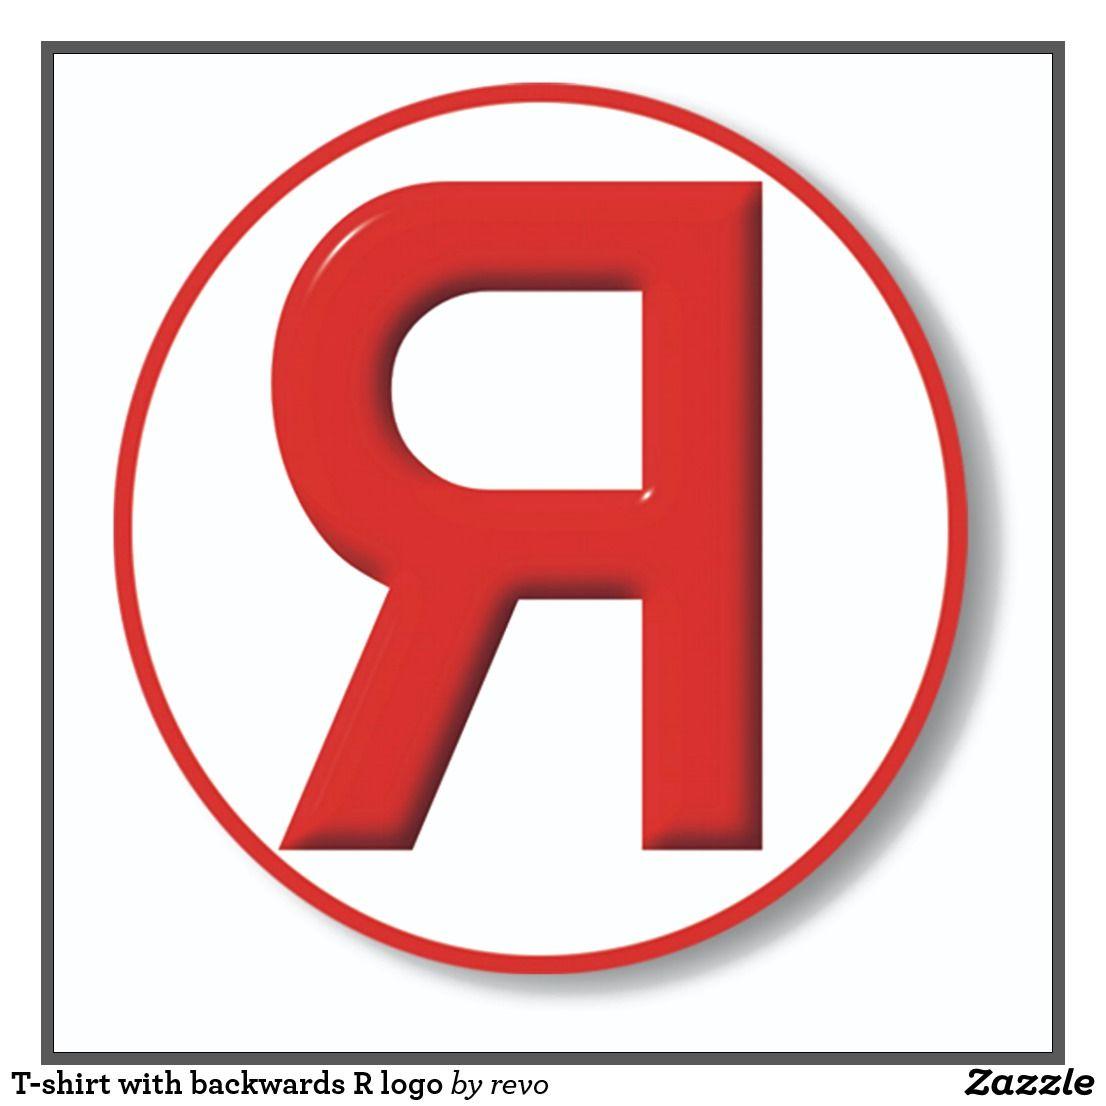 Backwards B and B Logo - Backwards b forward b Logos